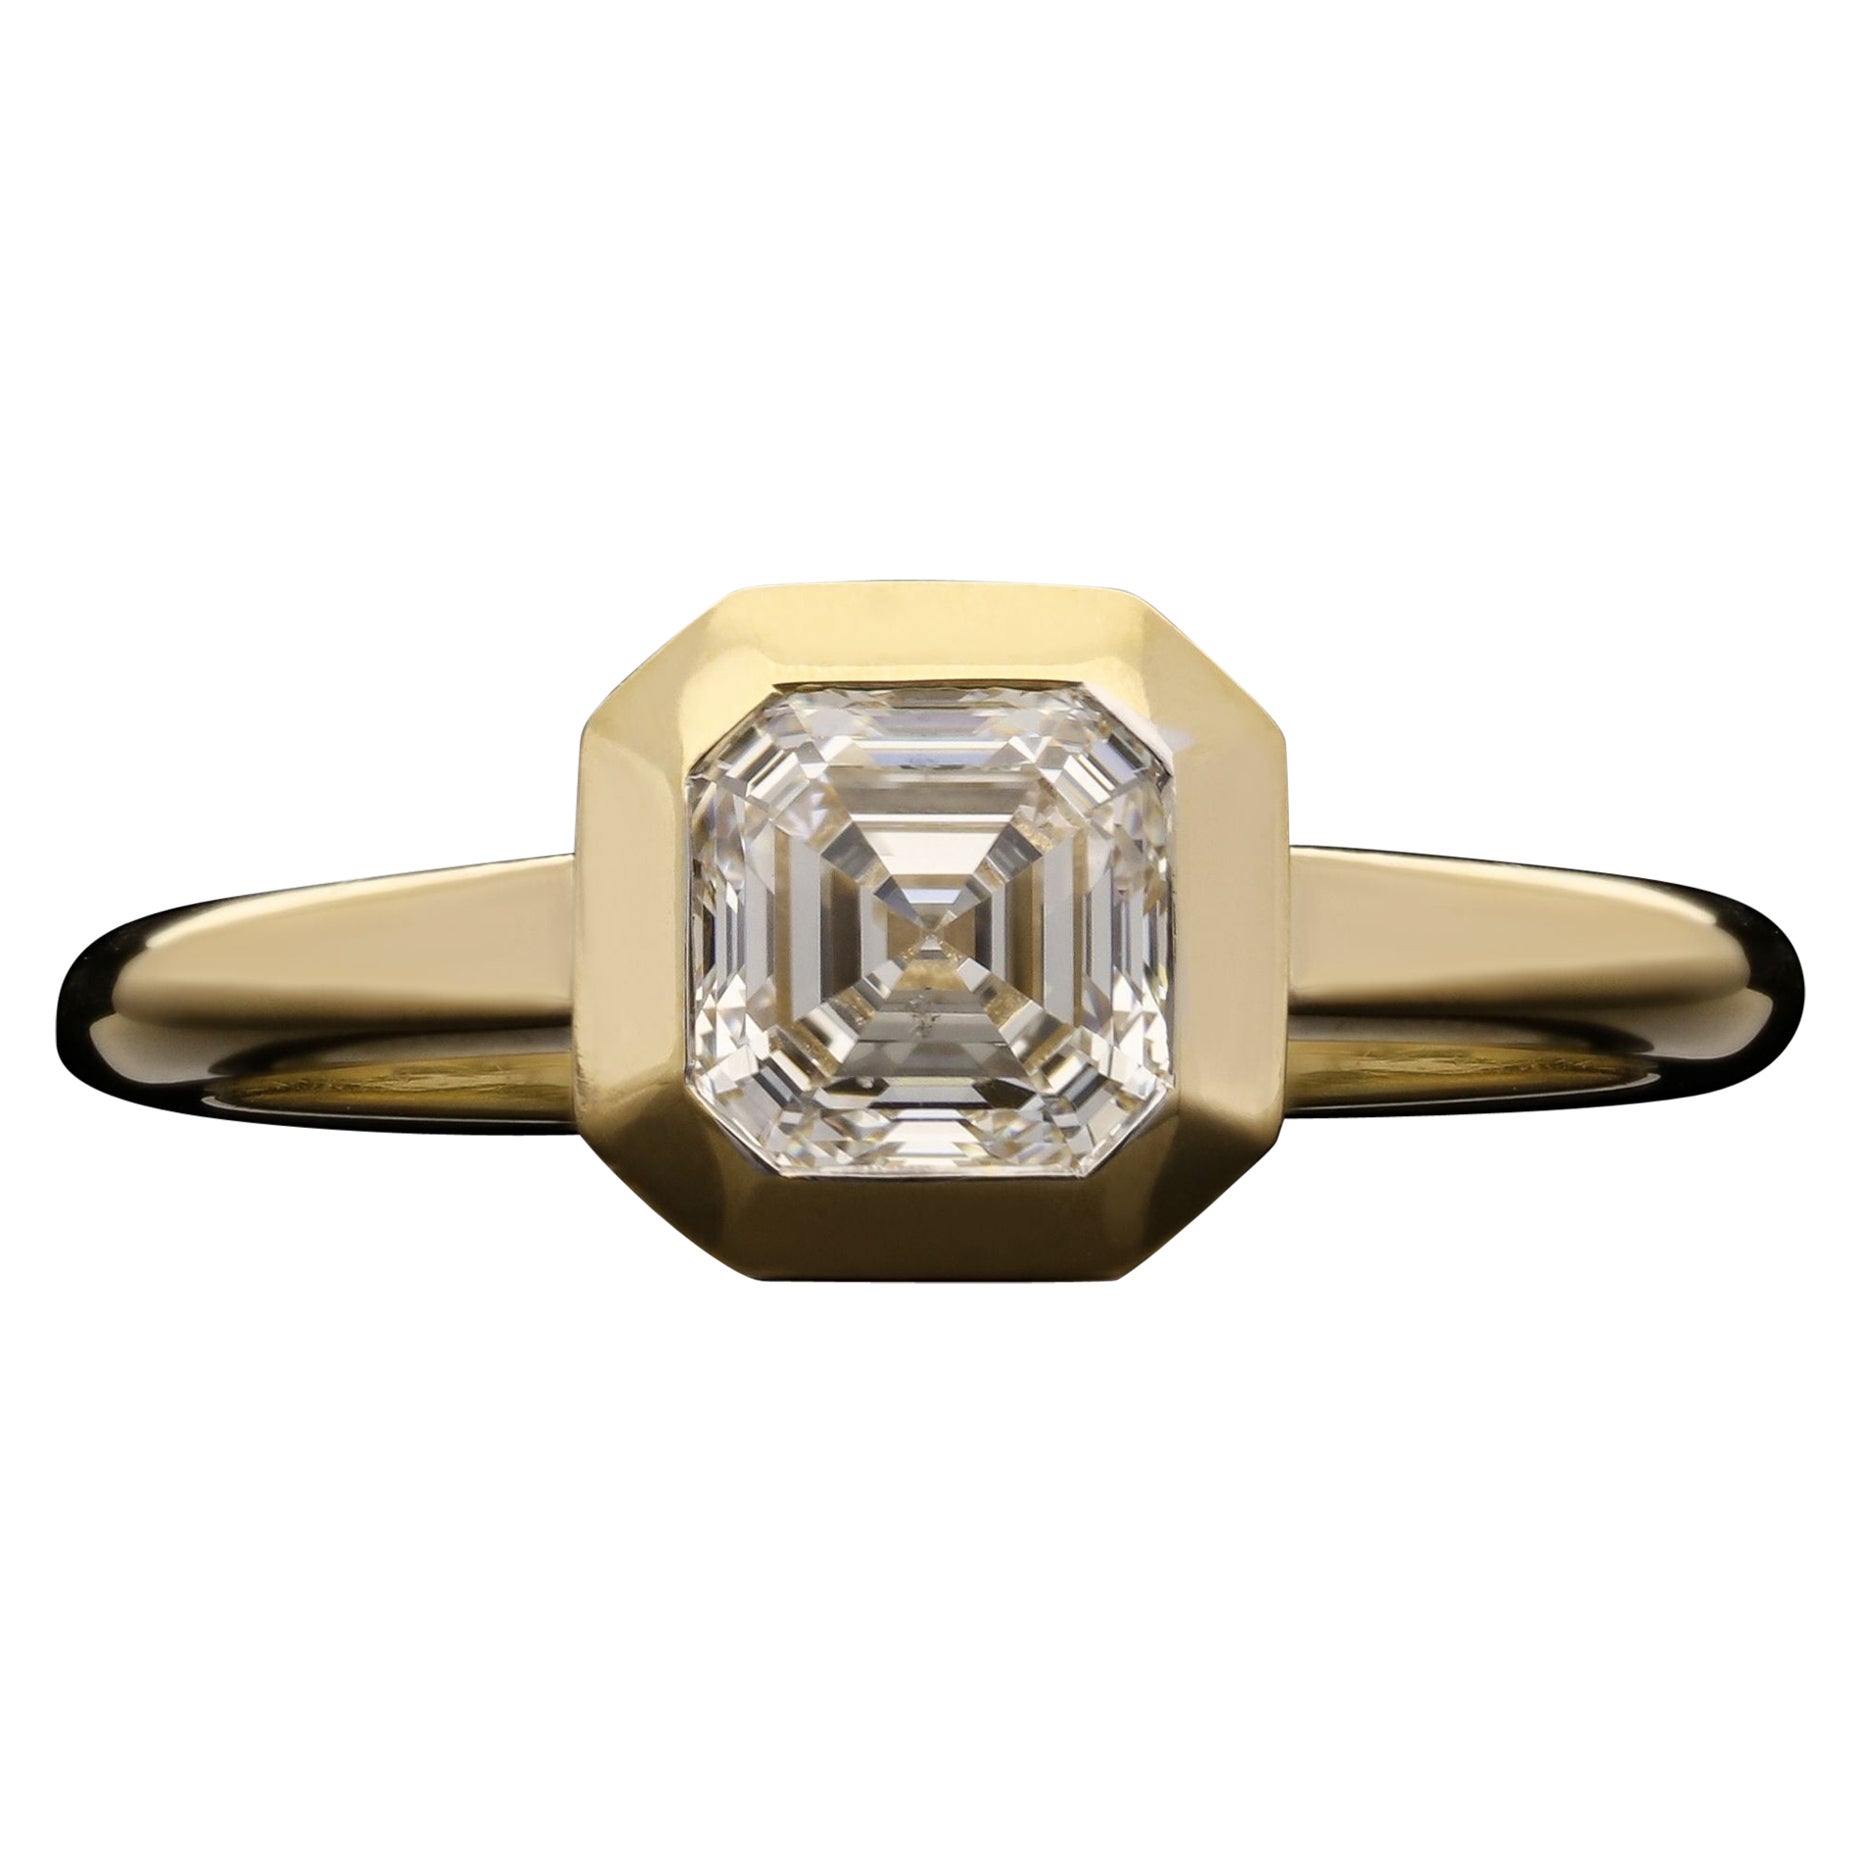 Hancocks 1.01ct Vintage Asscher Cut Diamond Ring Bezel Set in Yellow Gold